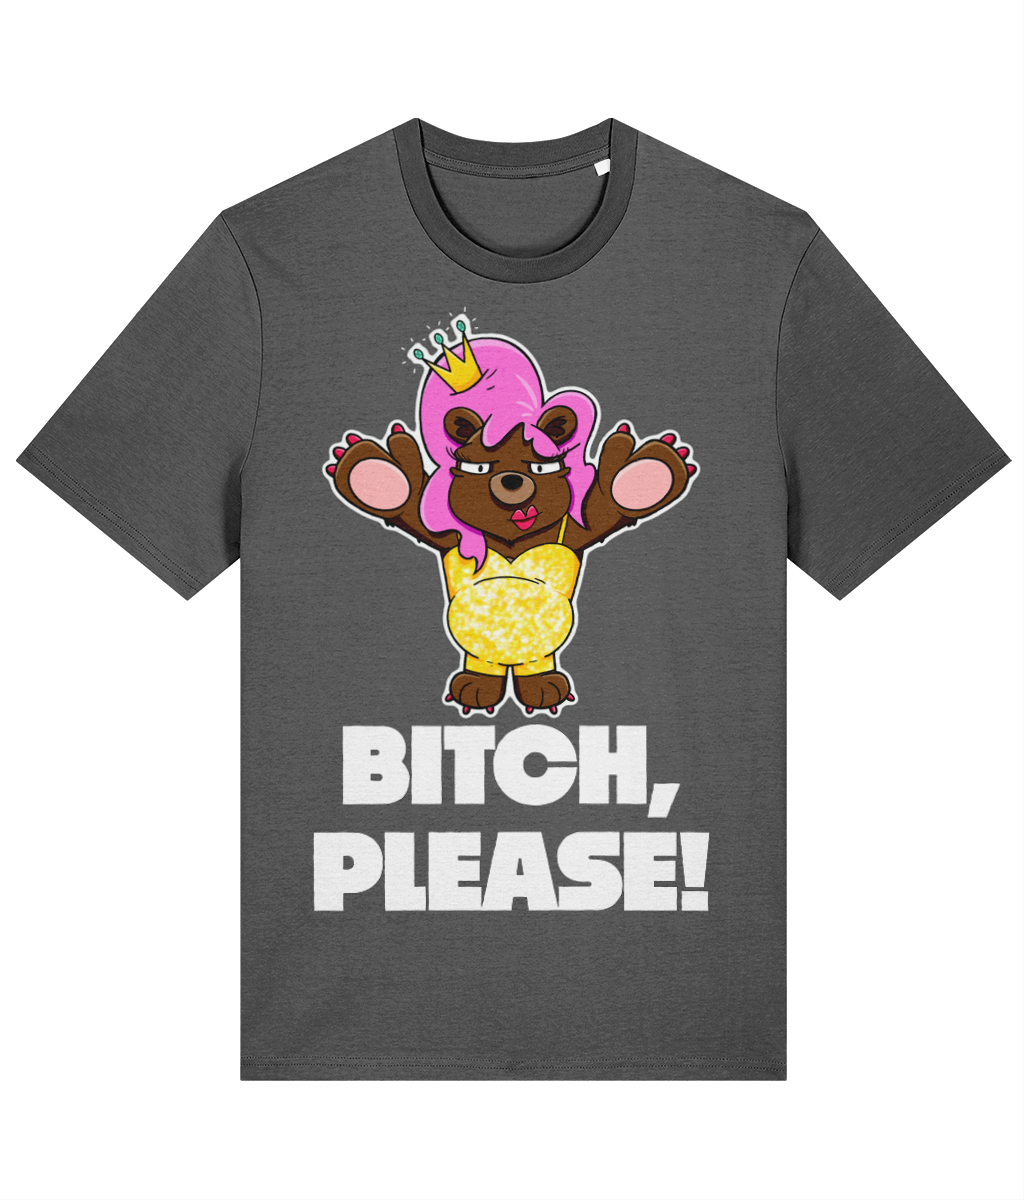 Bitch, Please! T-Shirt